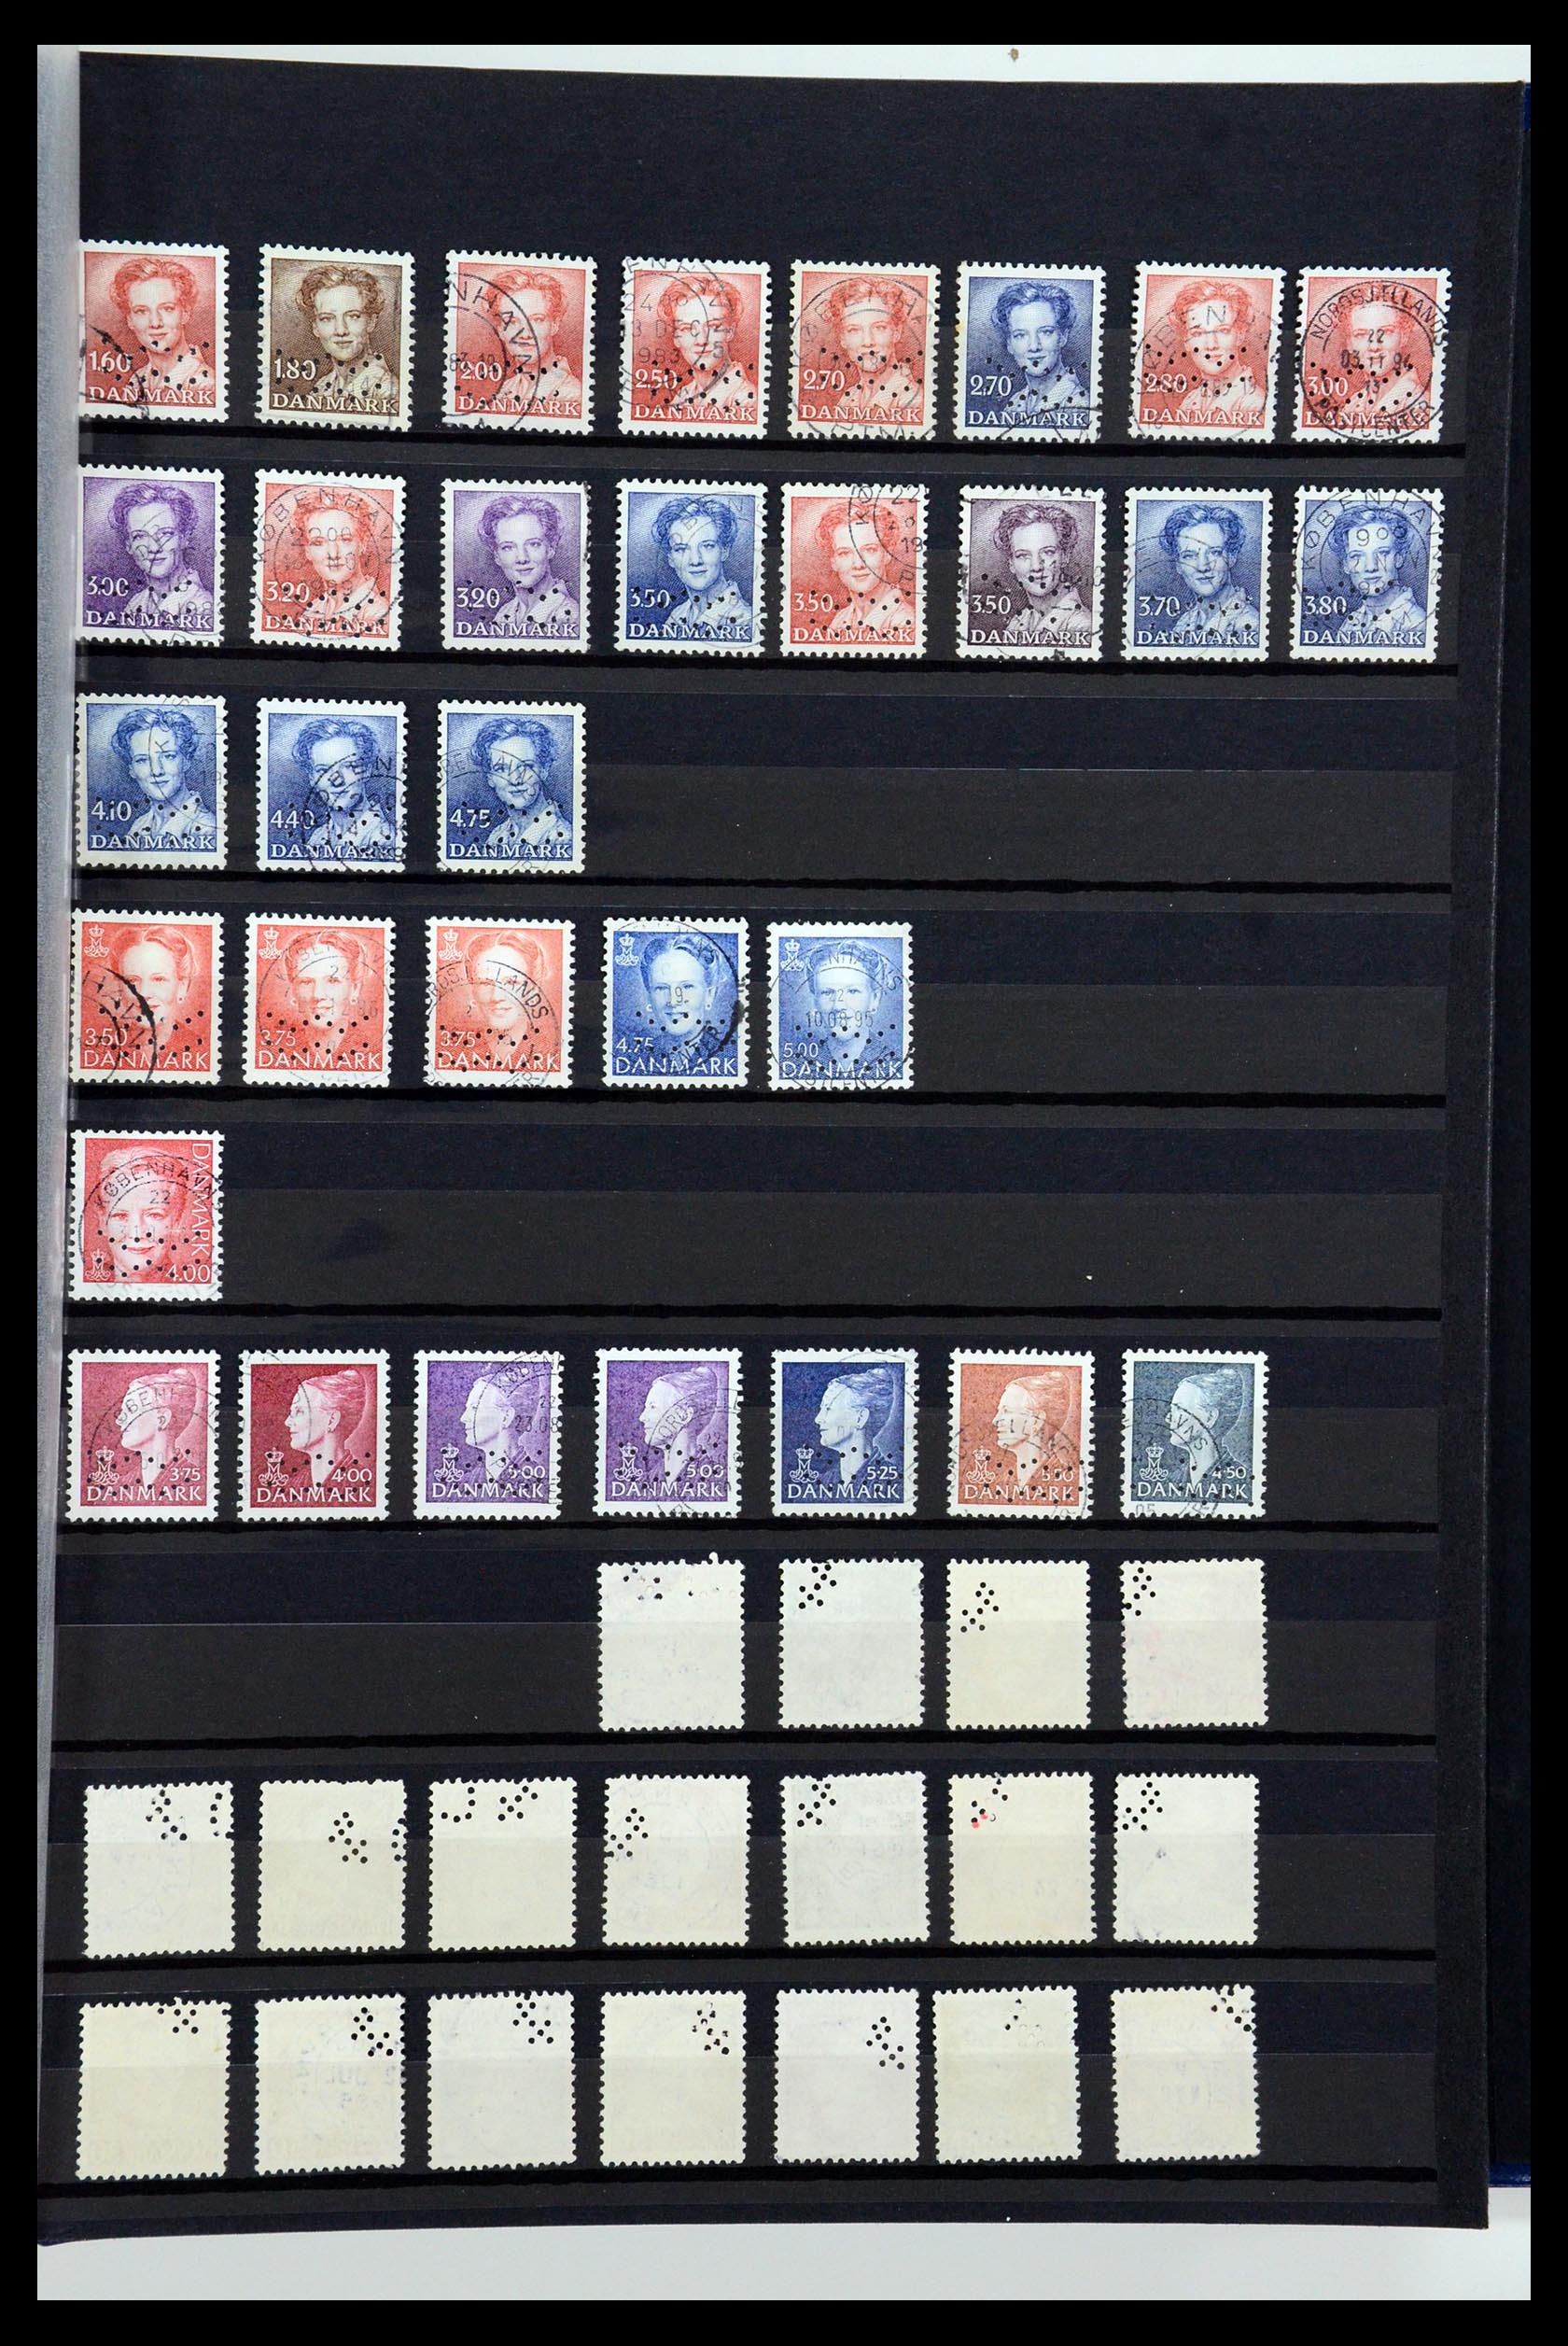 36396 233 - Stamp collection 36396 Denmark perfins.